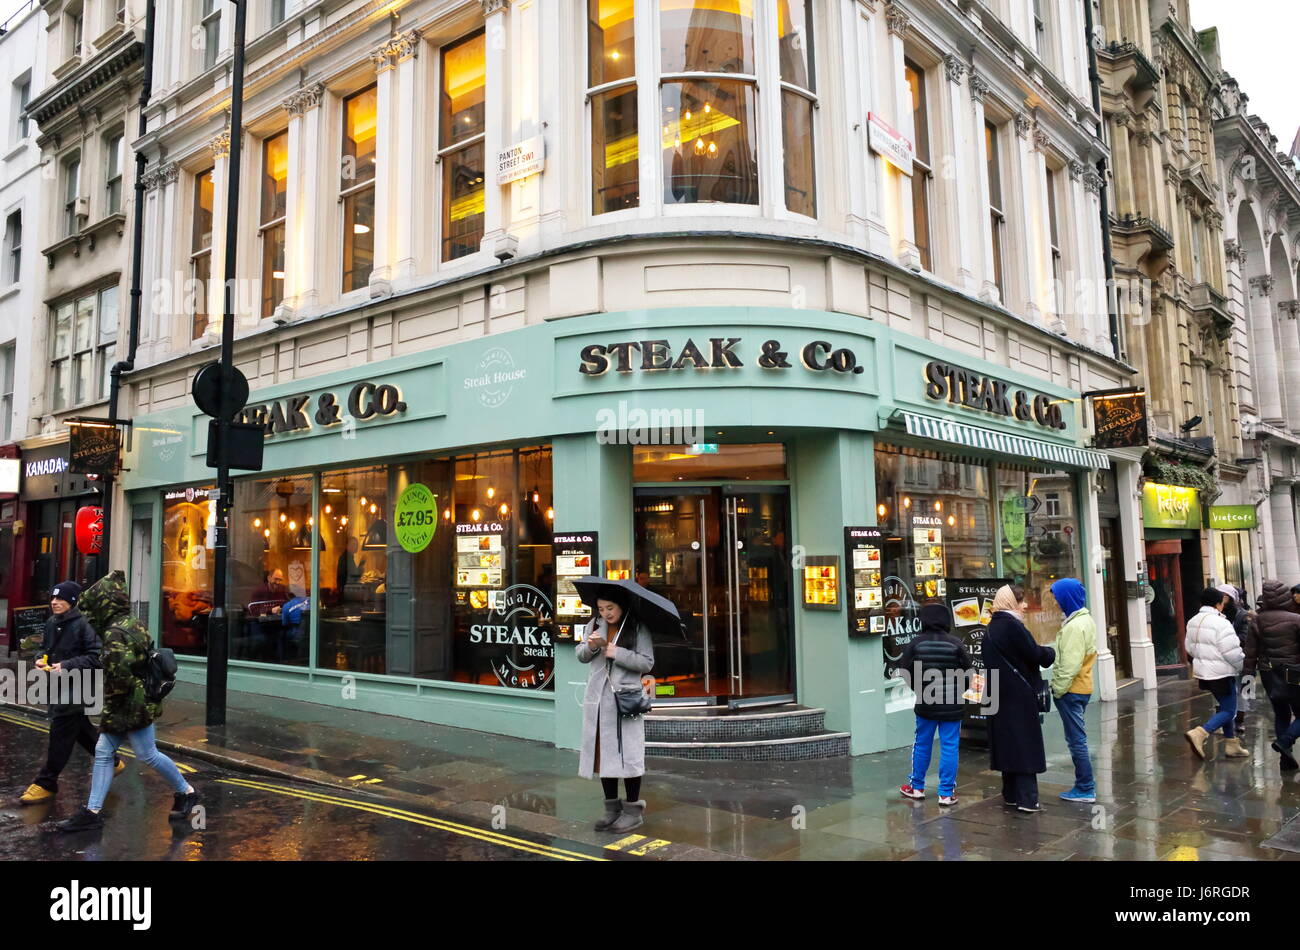 Steak & Co. Restaurant in London, UK Stock Photo